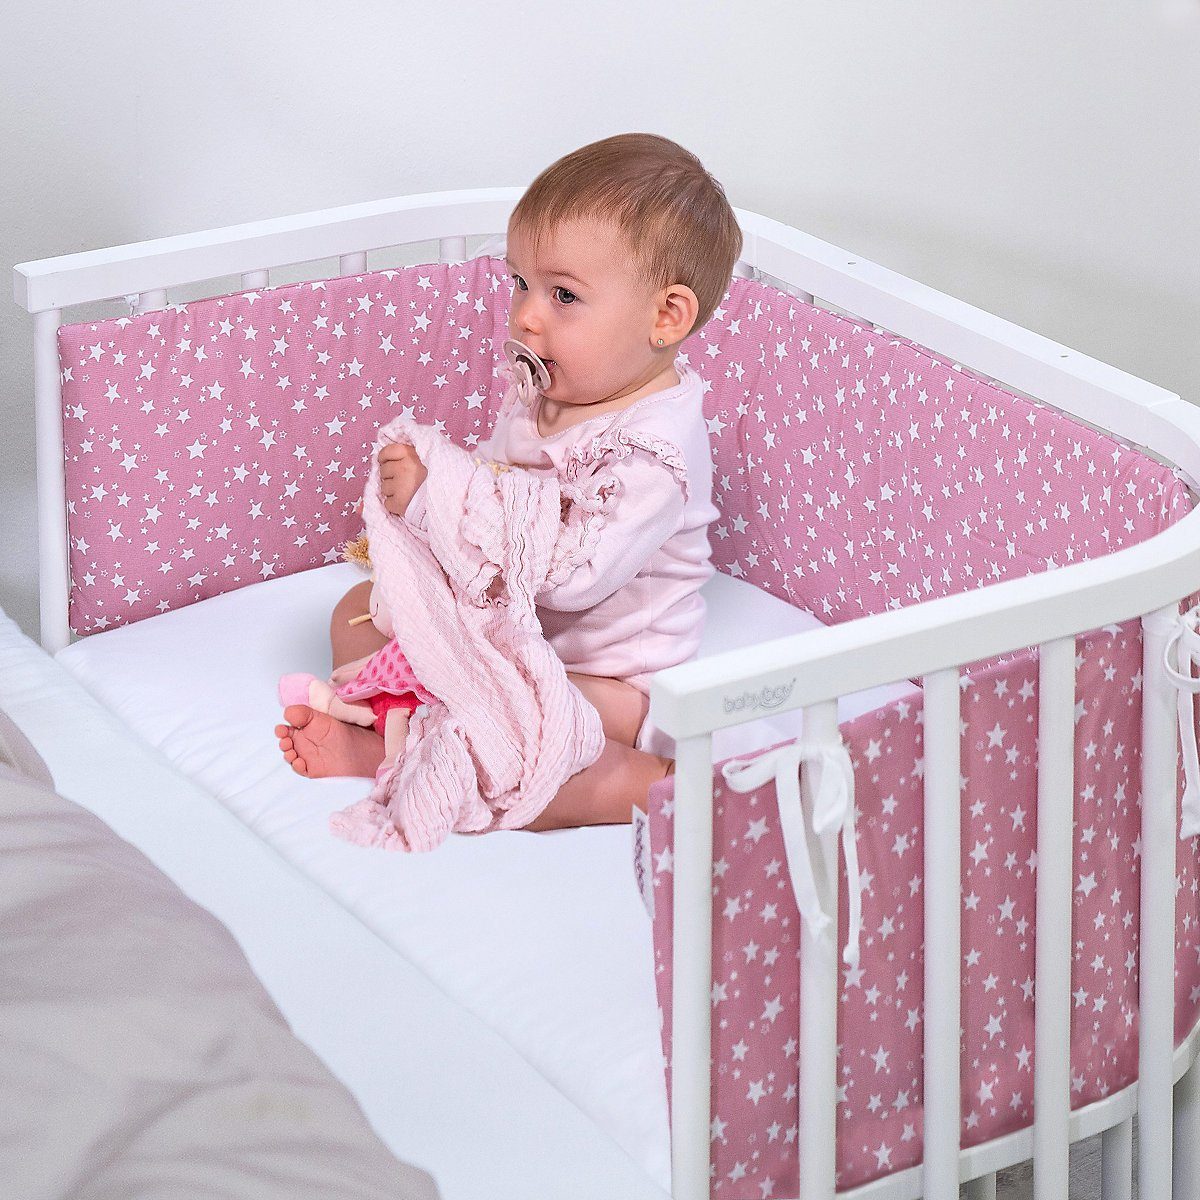 Heimtextilien Bettlaken Bettlaken Spannbettlaken 2er Set für alle babybay modelle, babybay